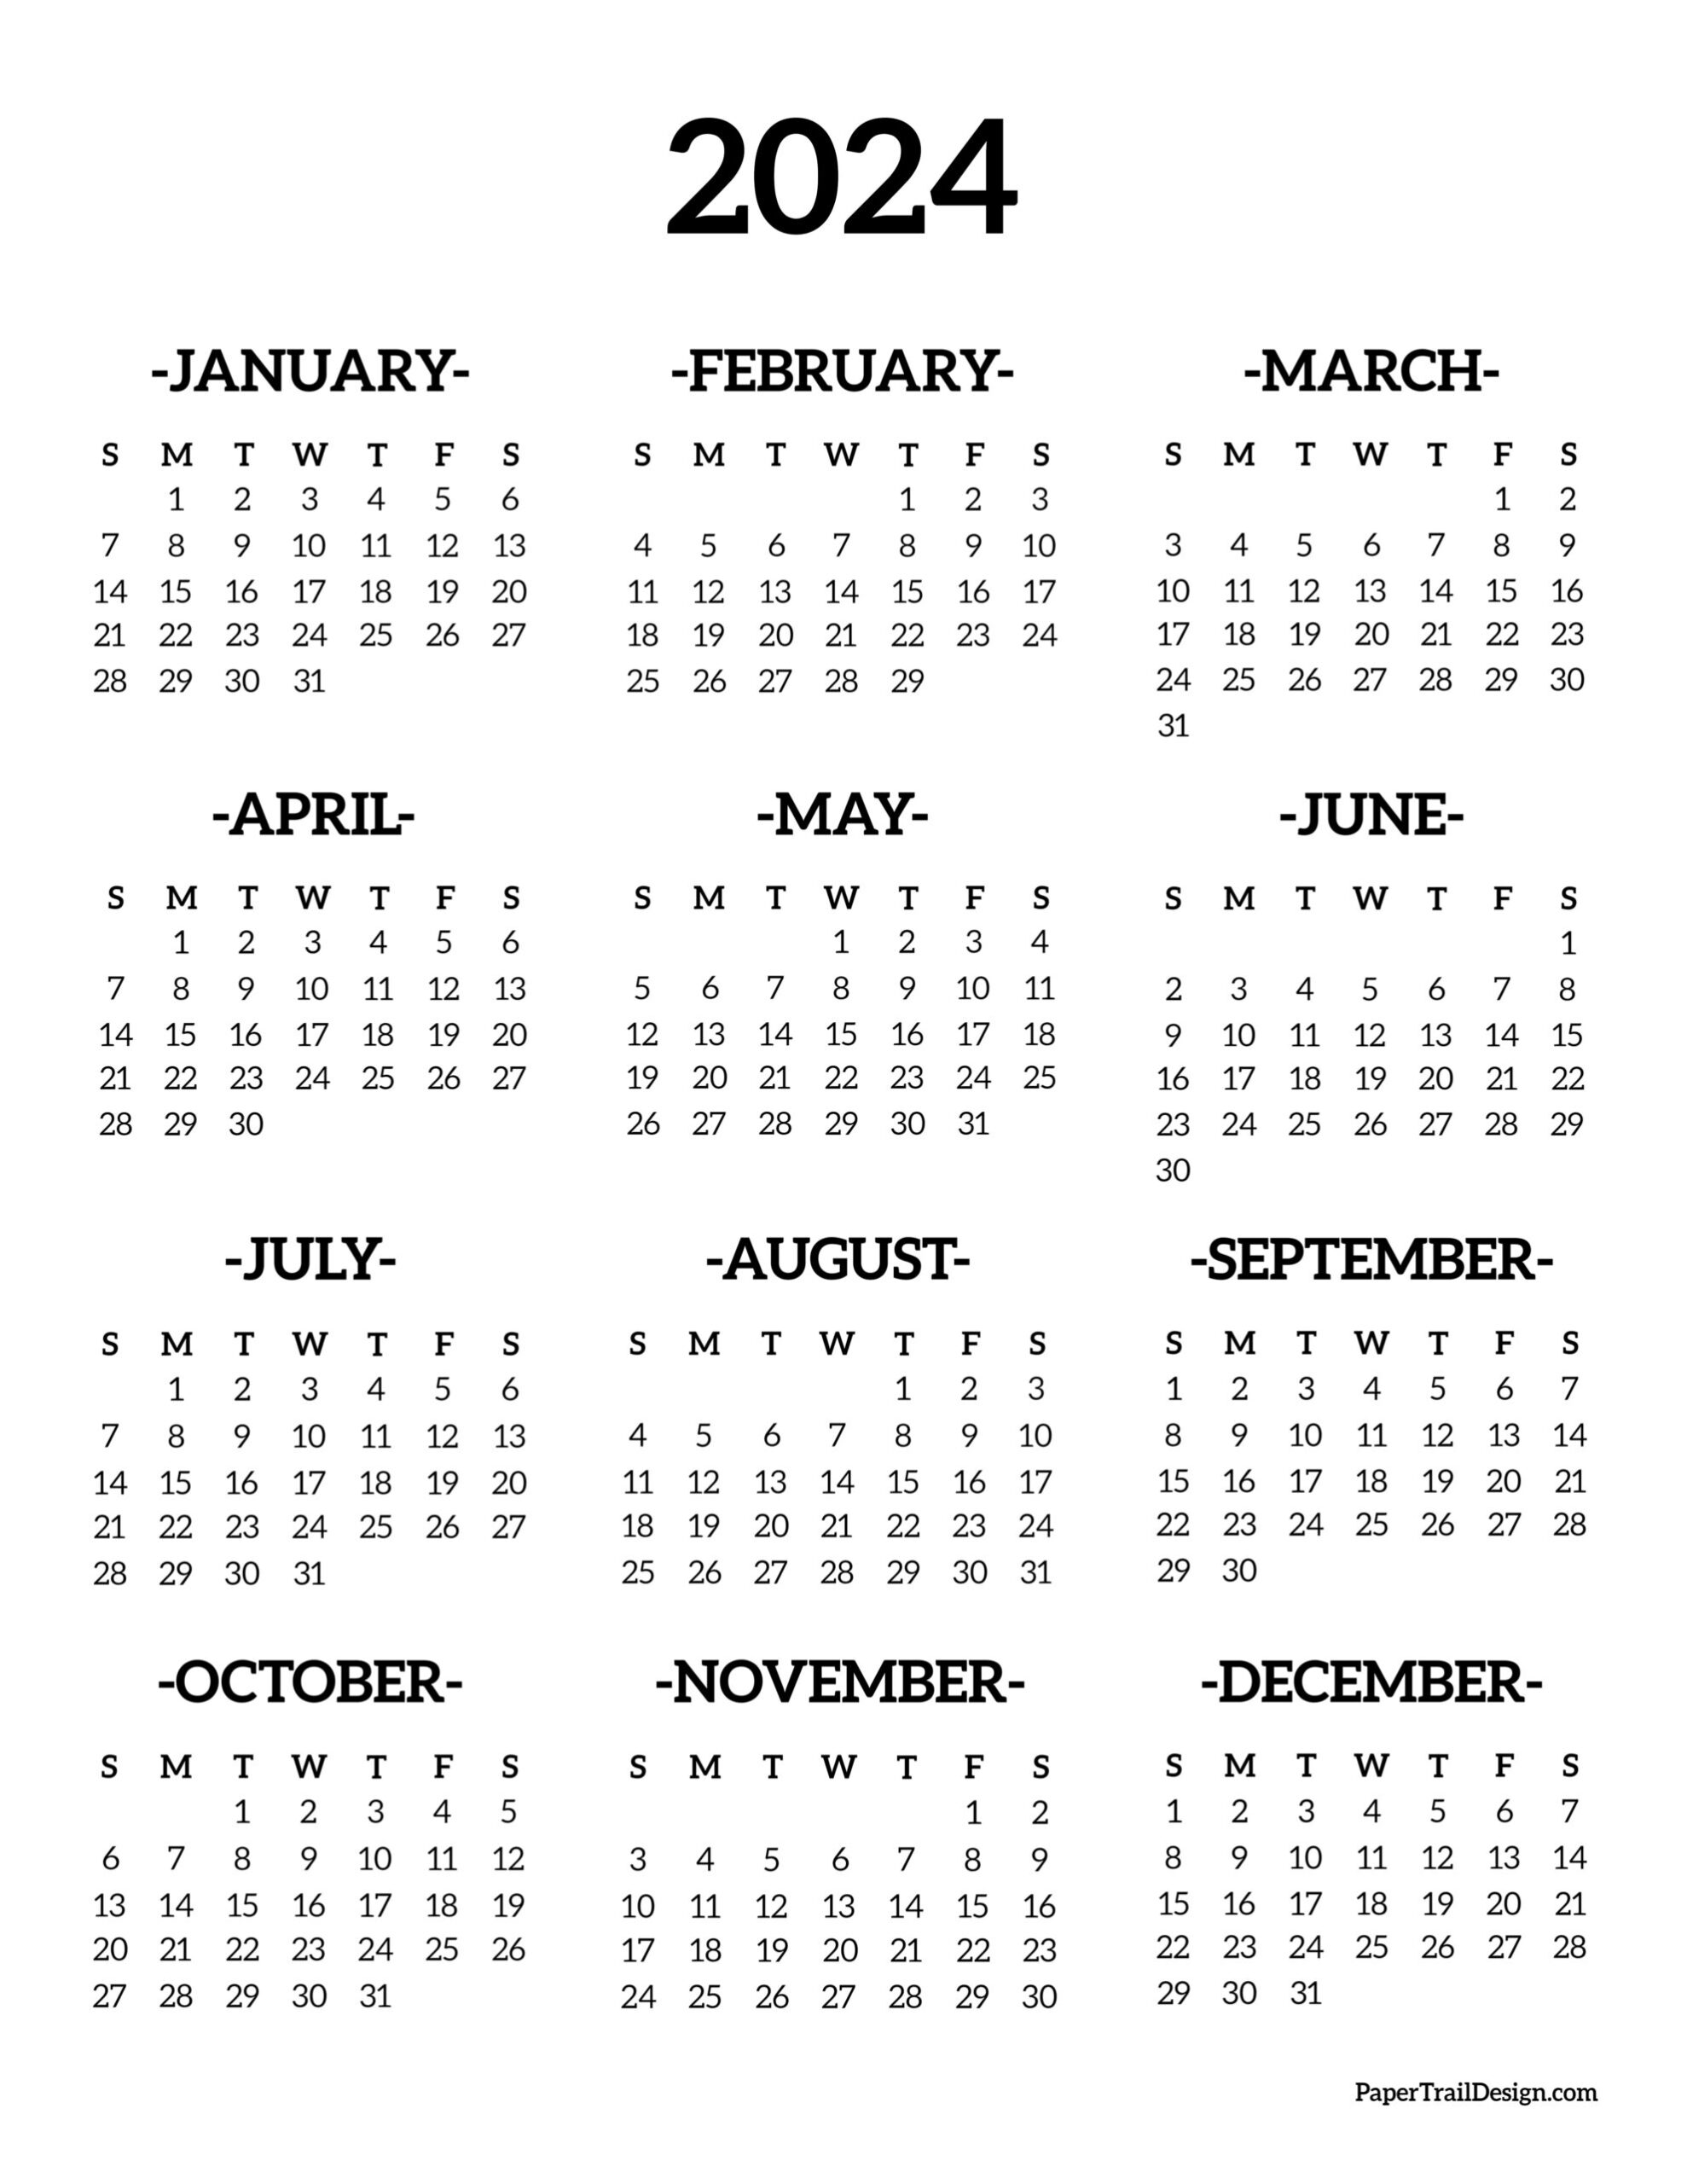 Calendar 2024 Printable One Page - Paper Trail Design for Free Printable 2024 Calendar